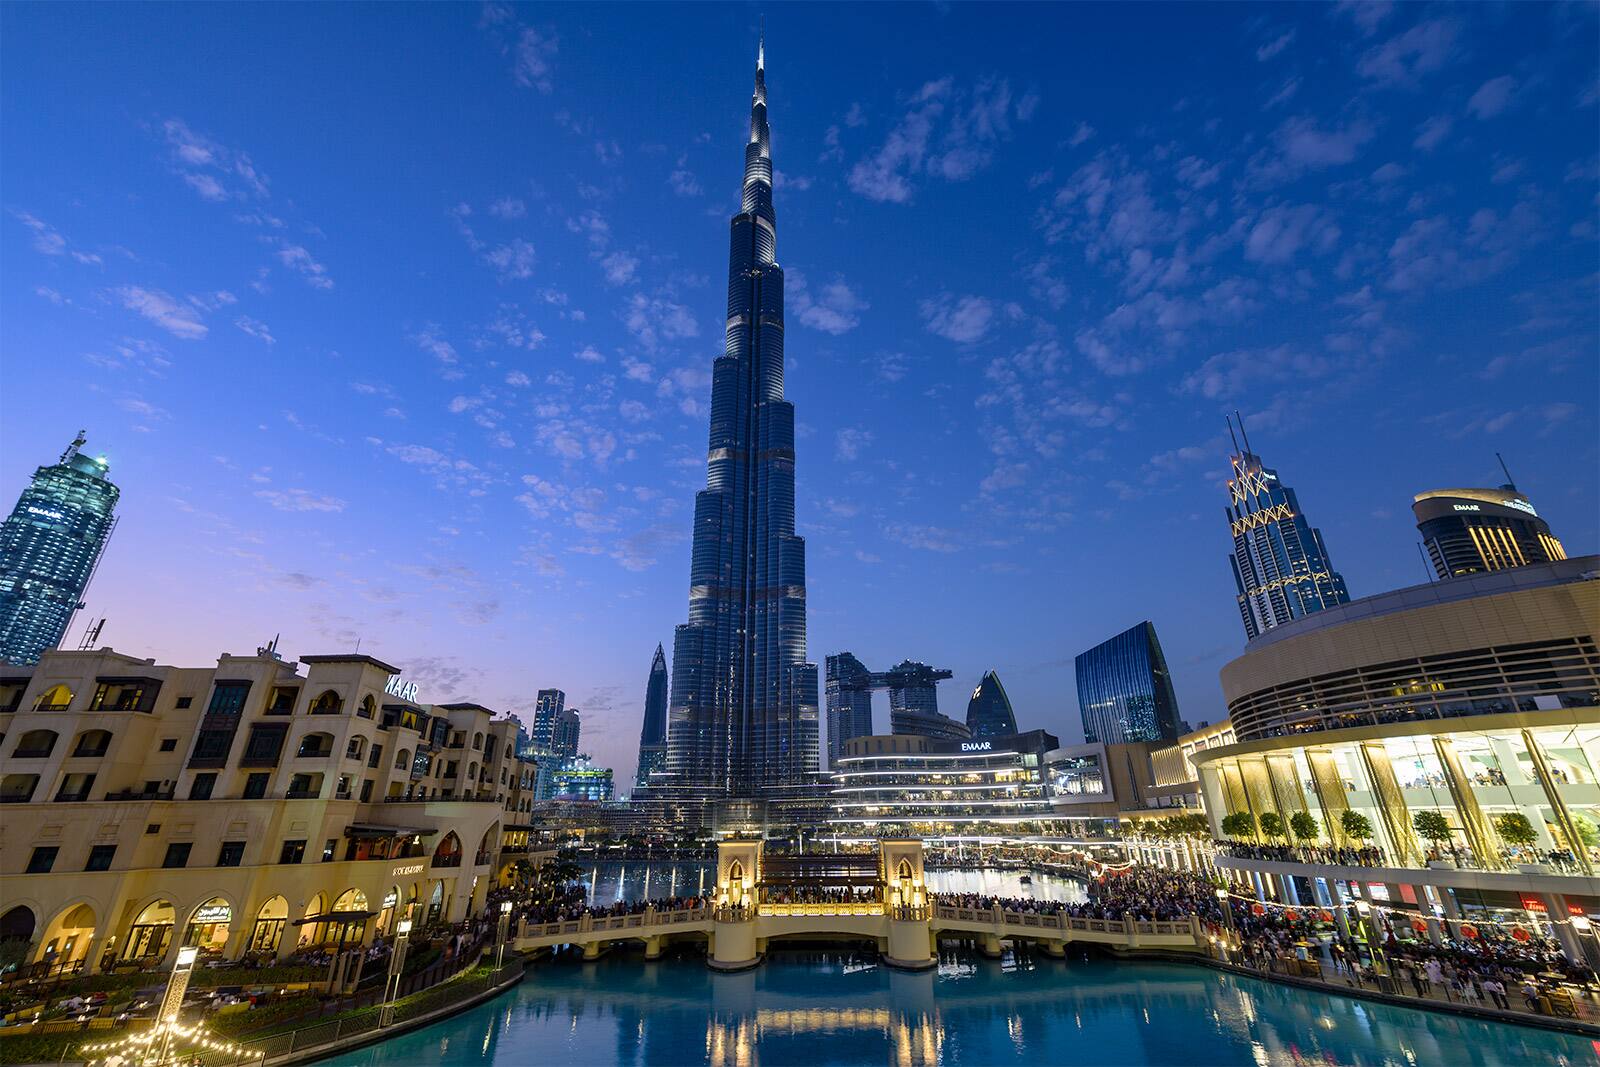 Telugu girl's love for Burj Khalifa - 10 Photos